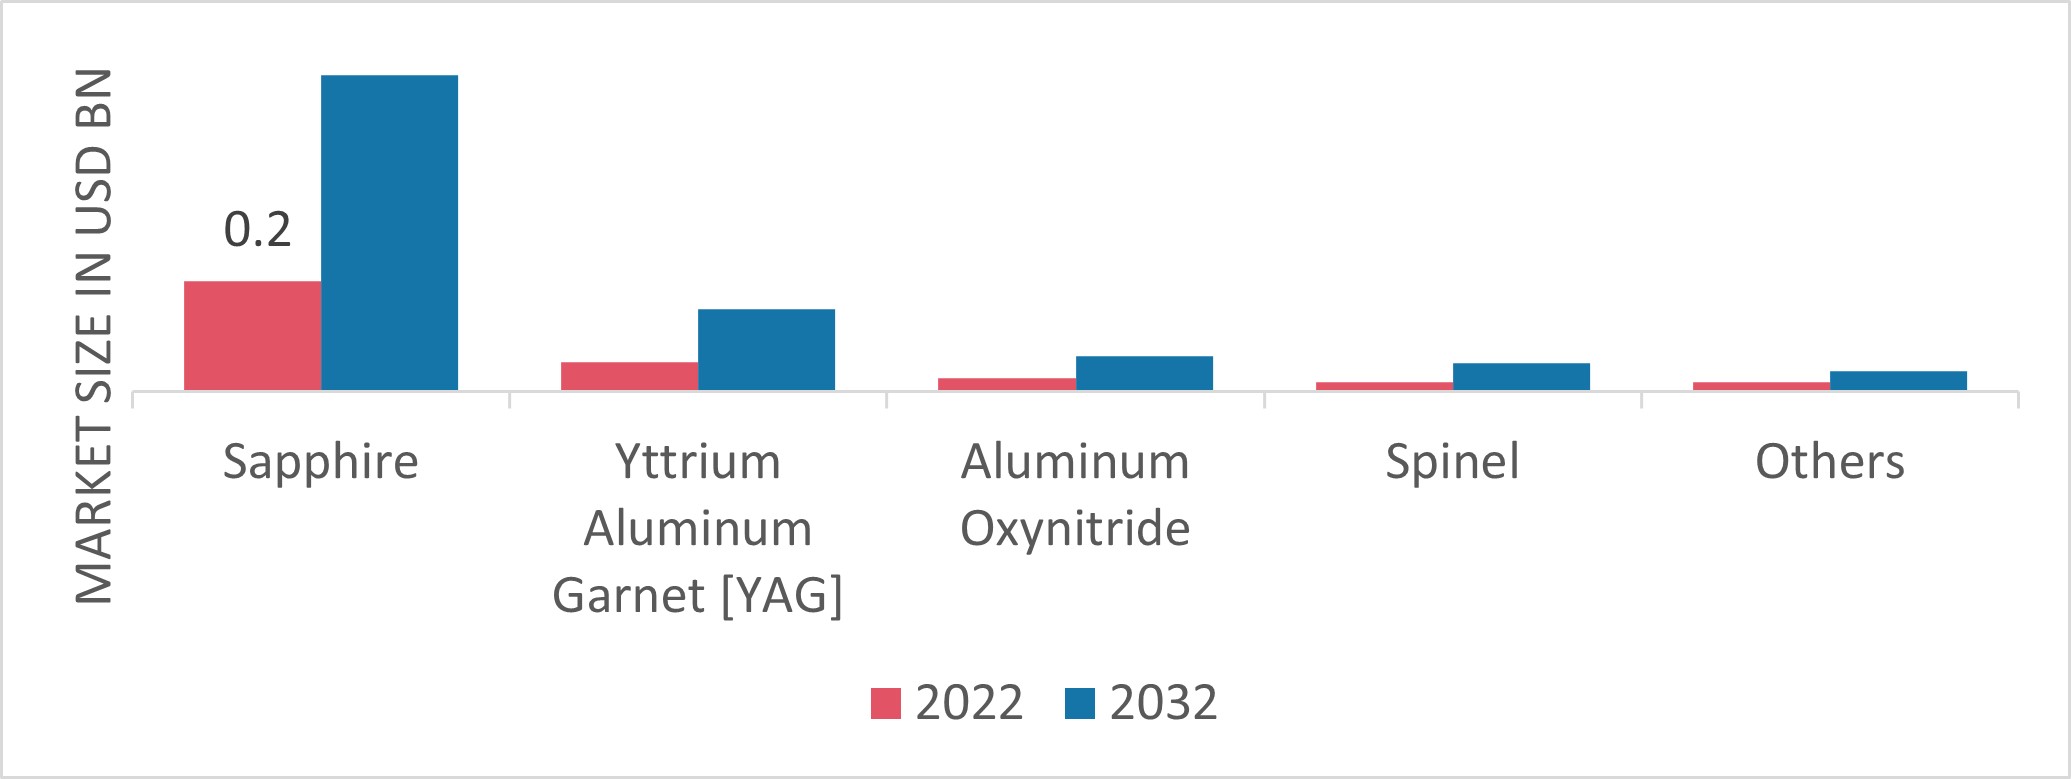 Optical Ceramics Market, by Material, 2022 & 2032